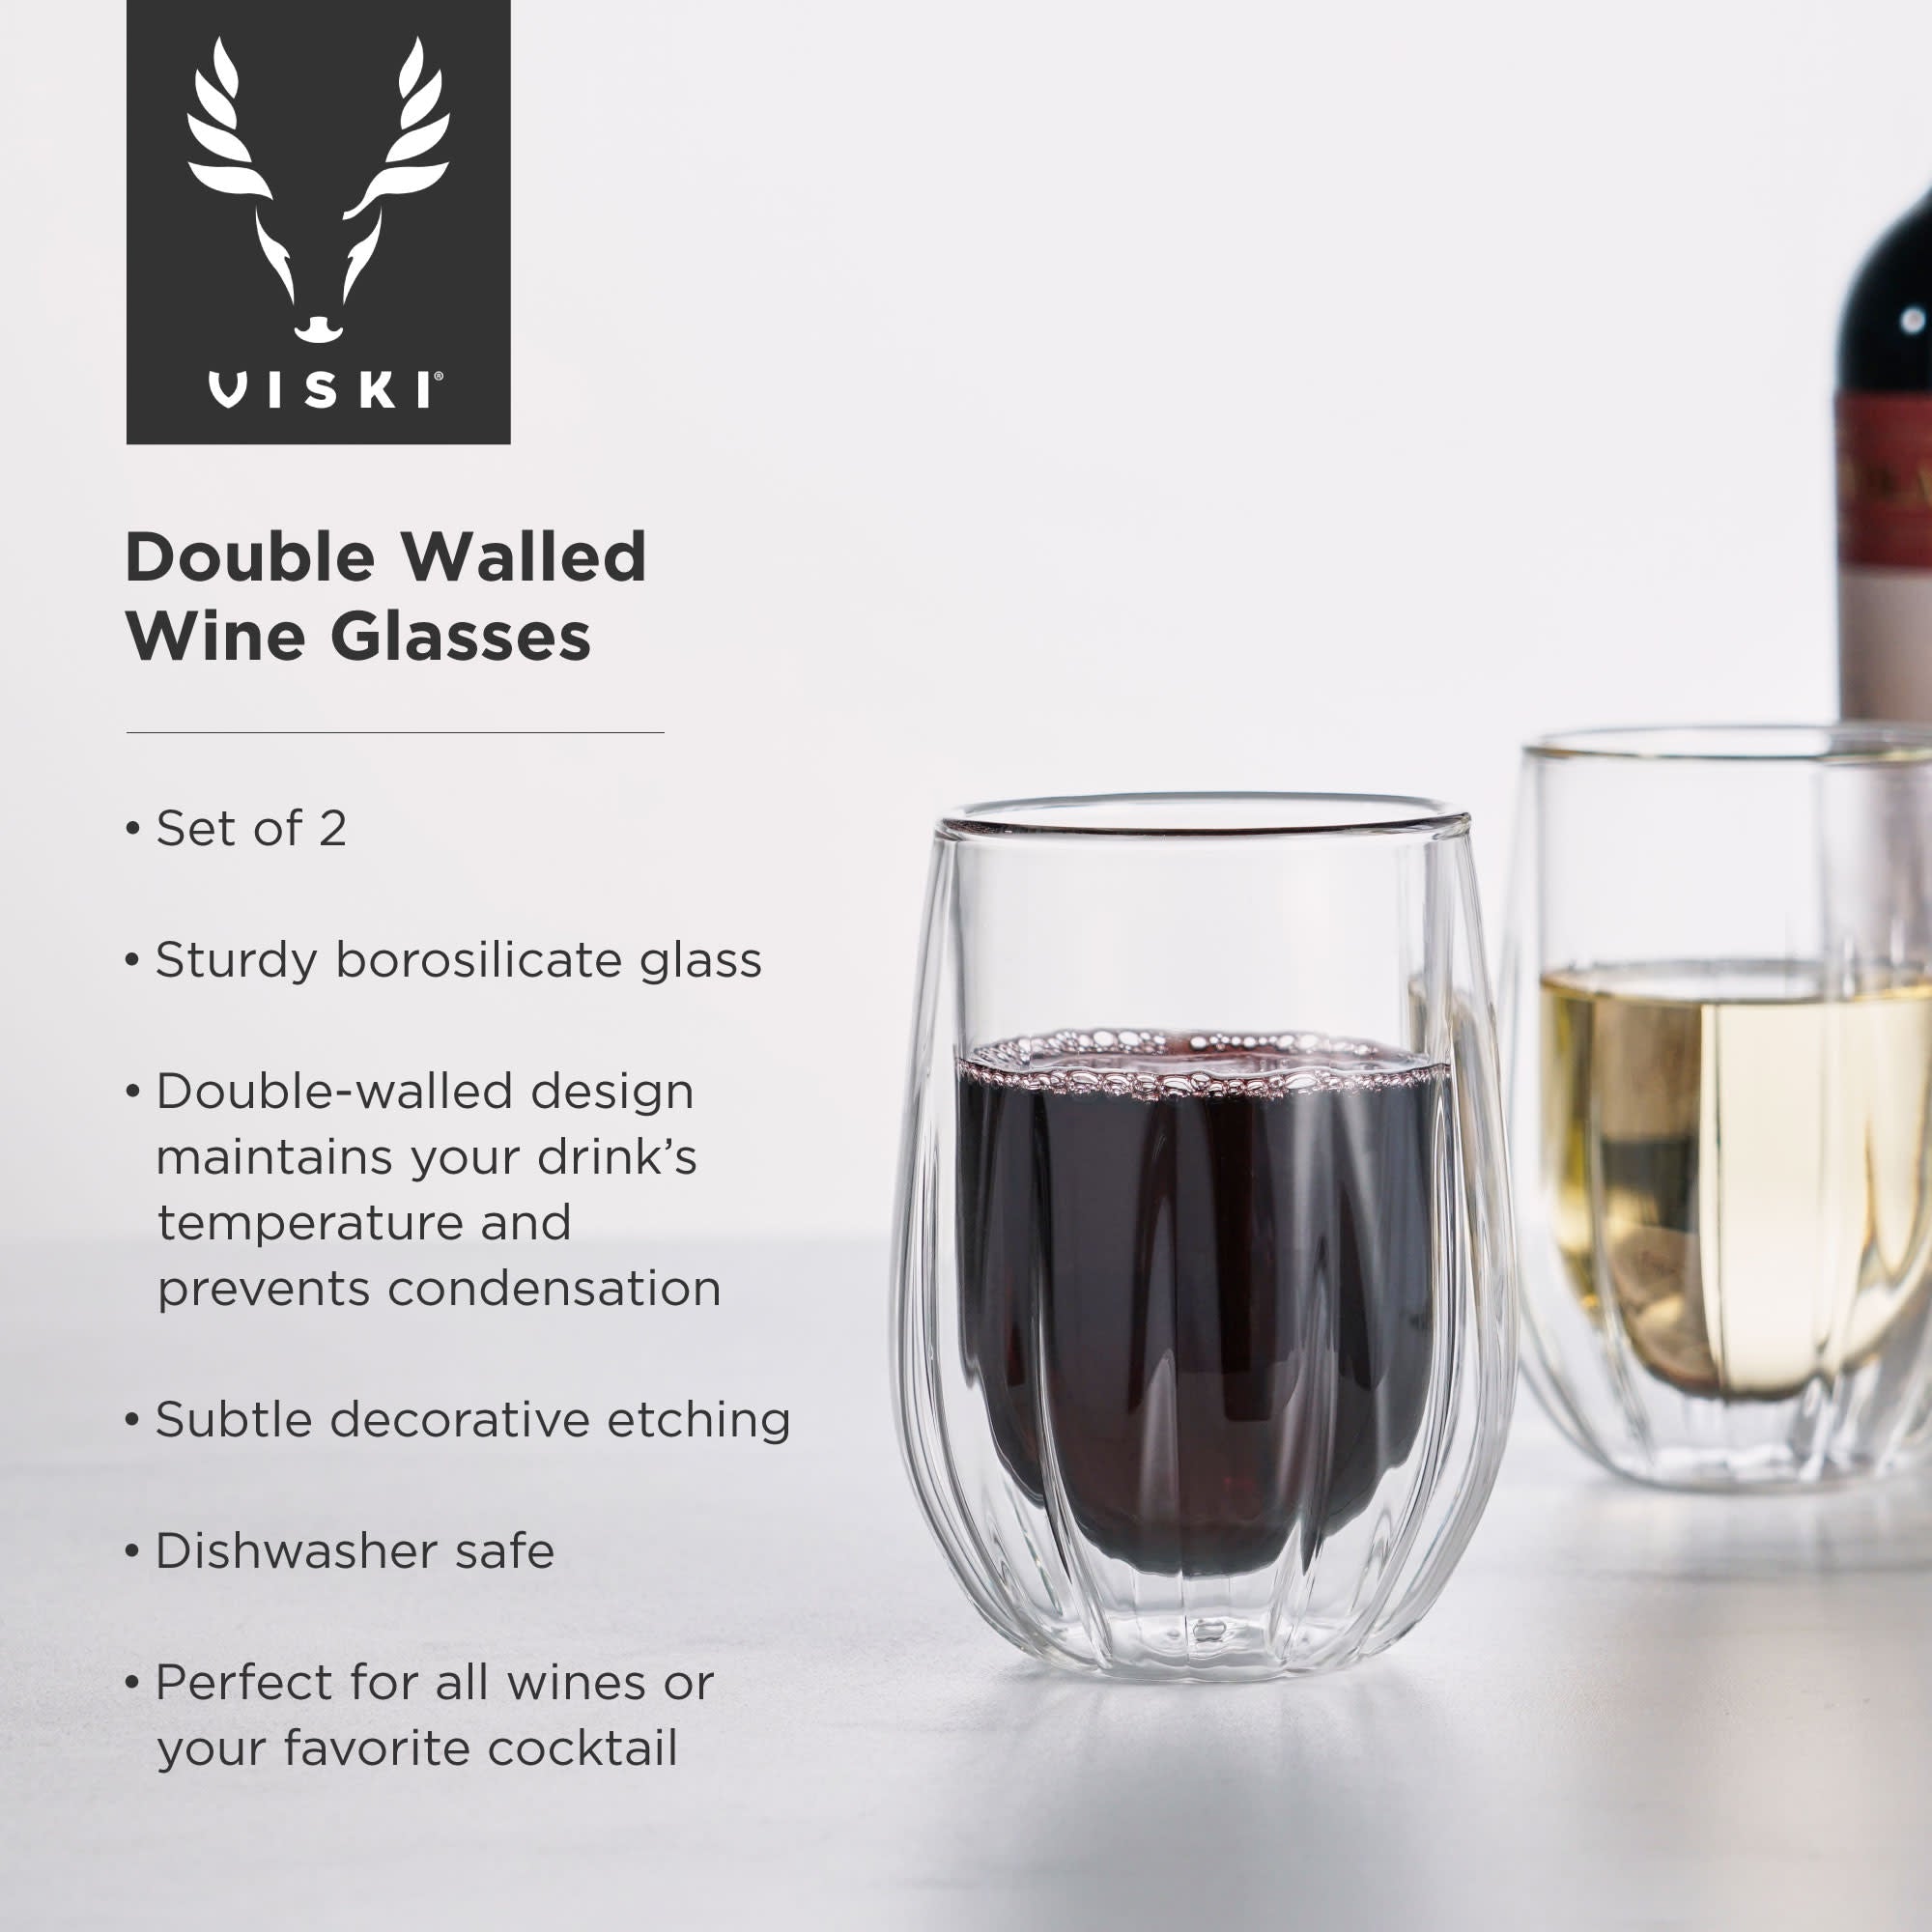 Double Walled Wine Glasses by Viski (11009)